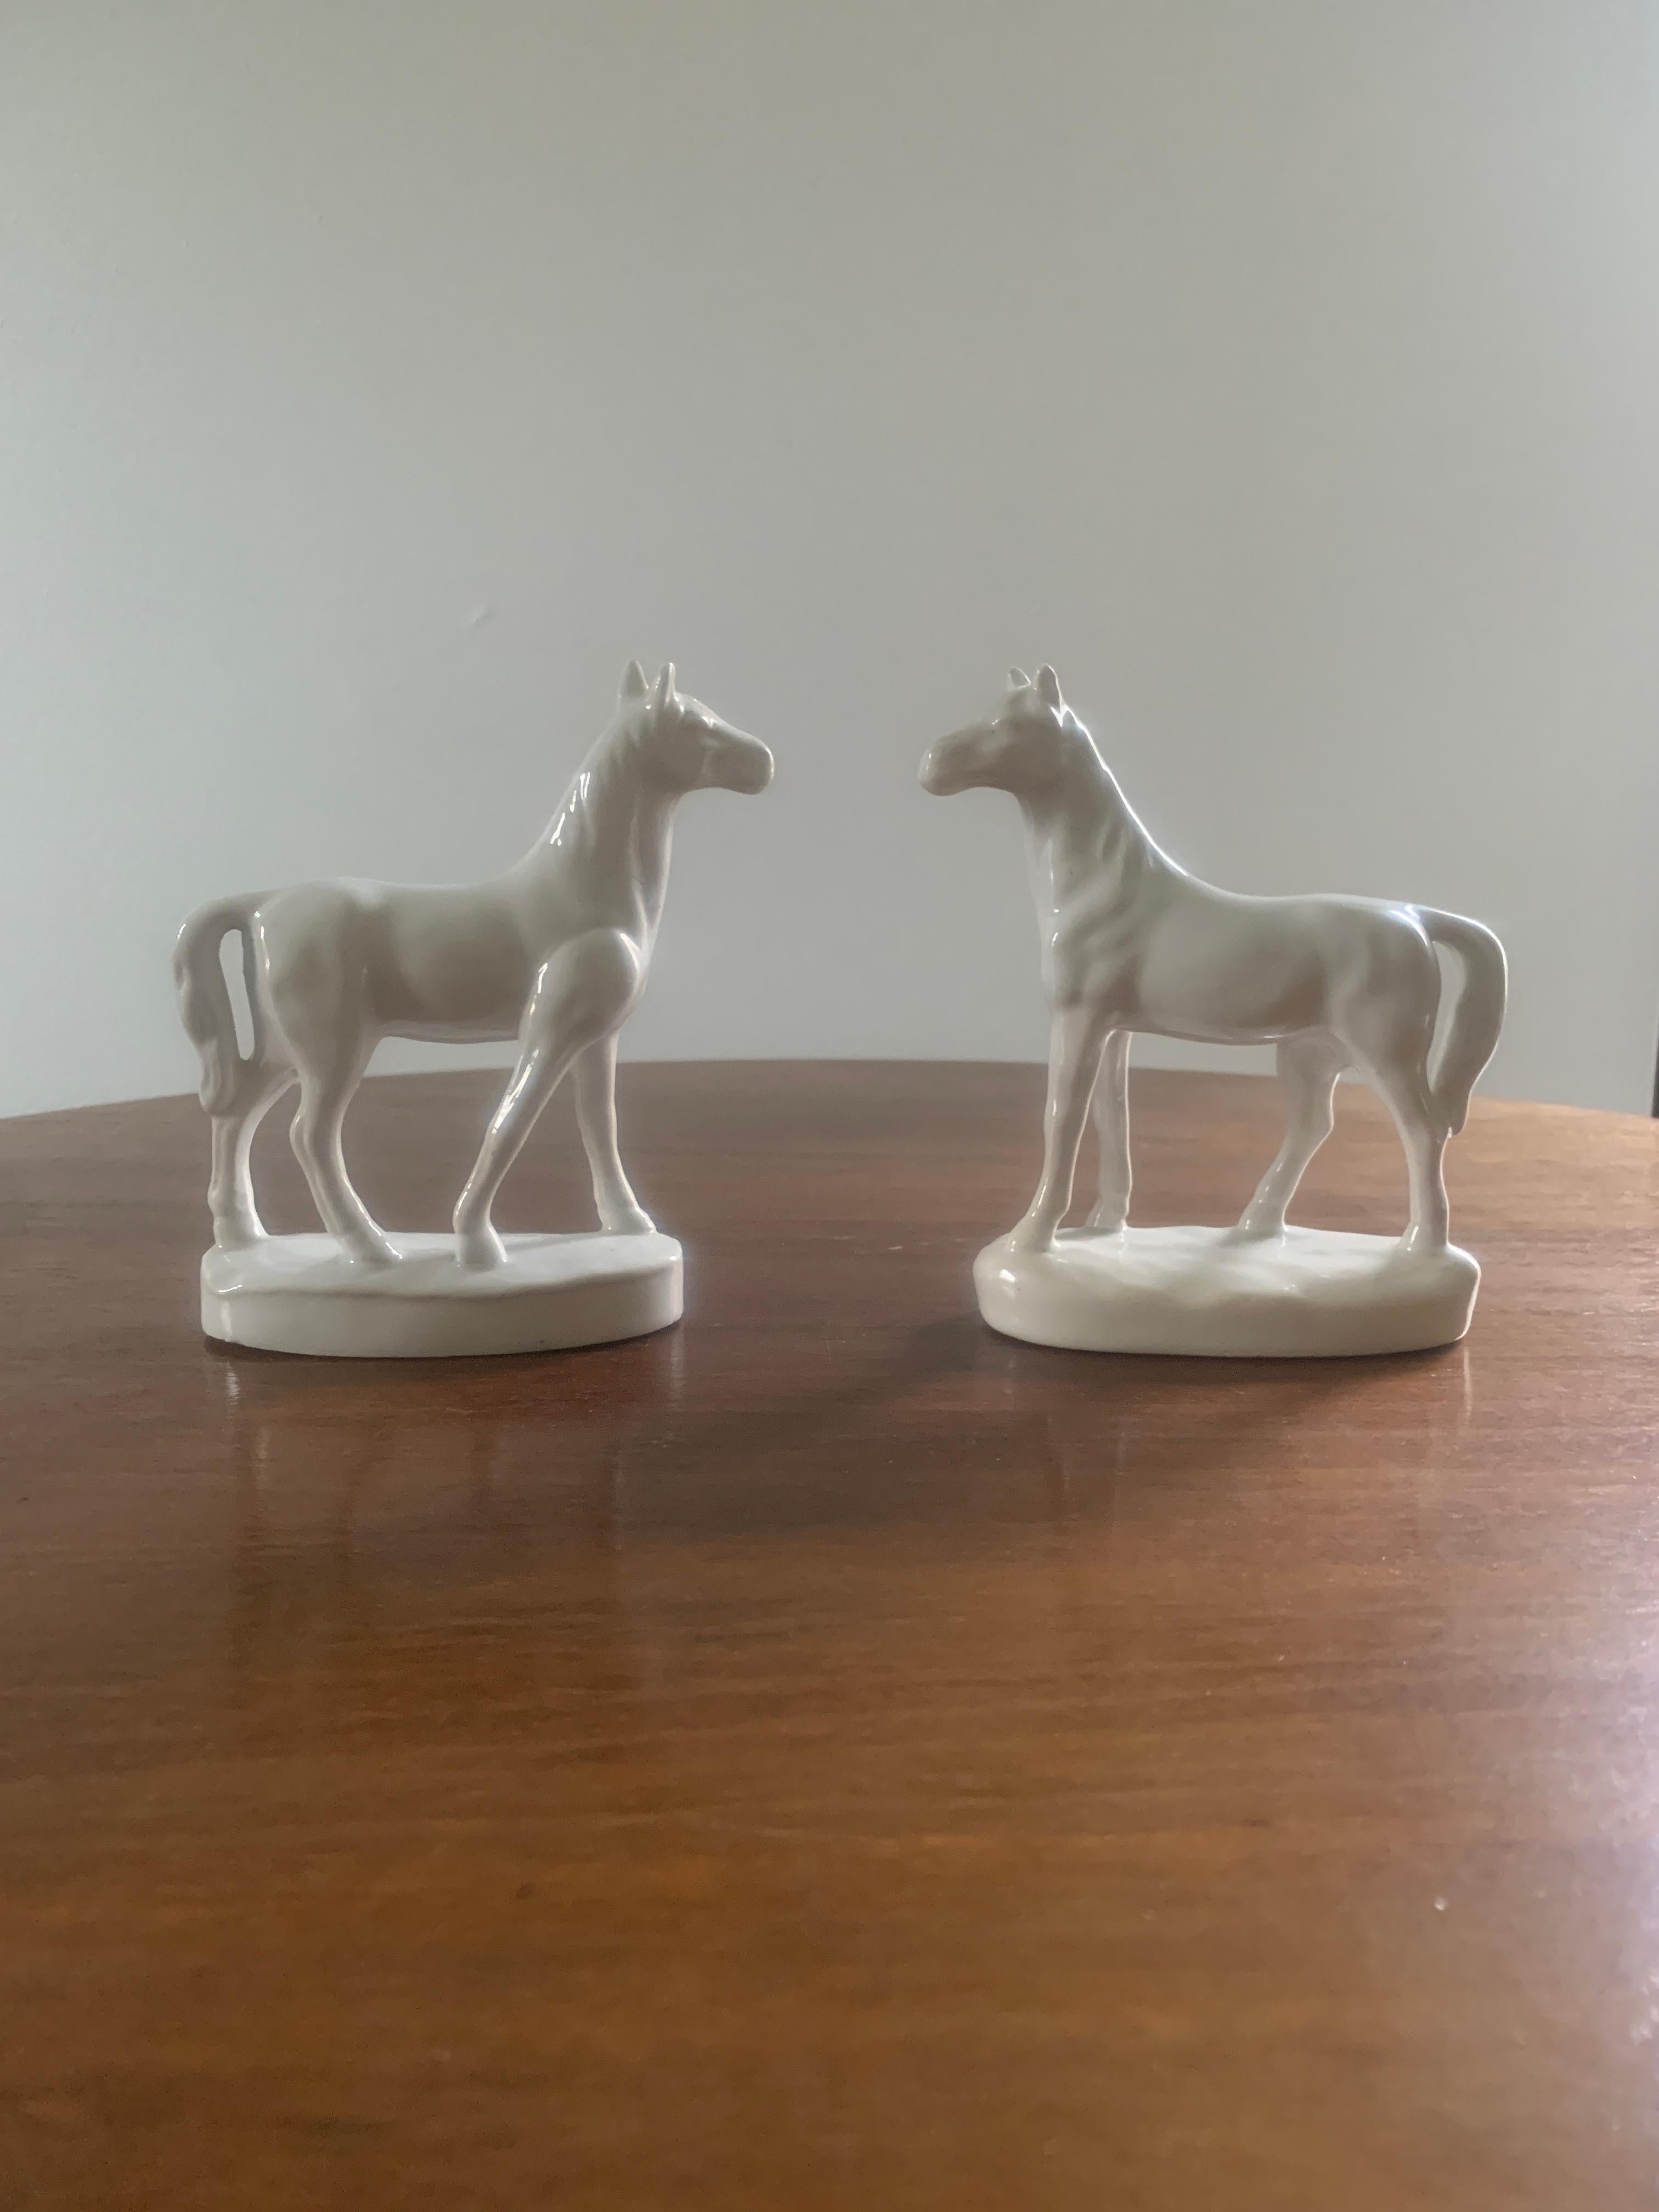 A pair of vintage white porcelain horses.